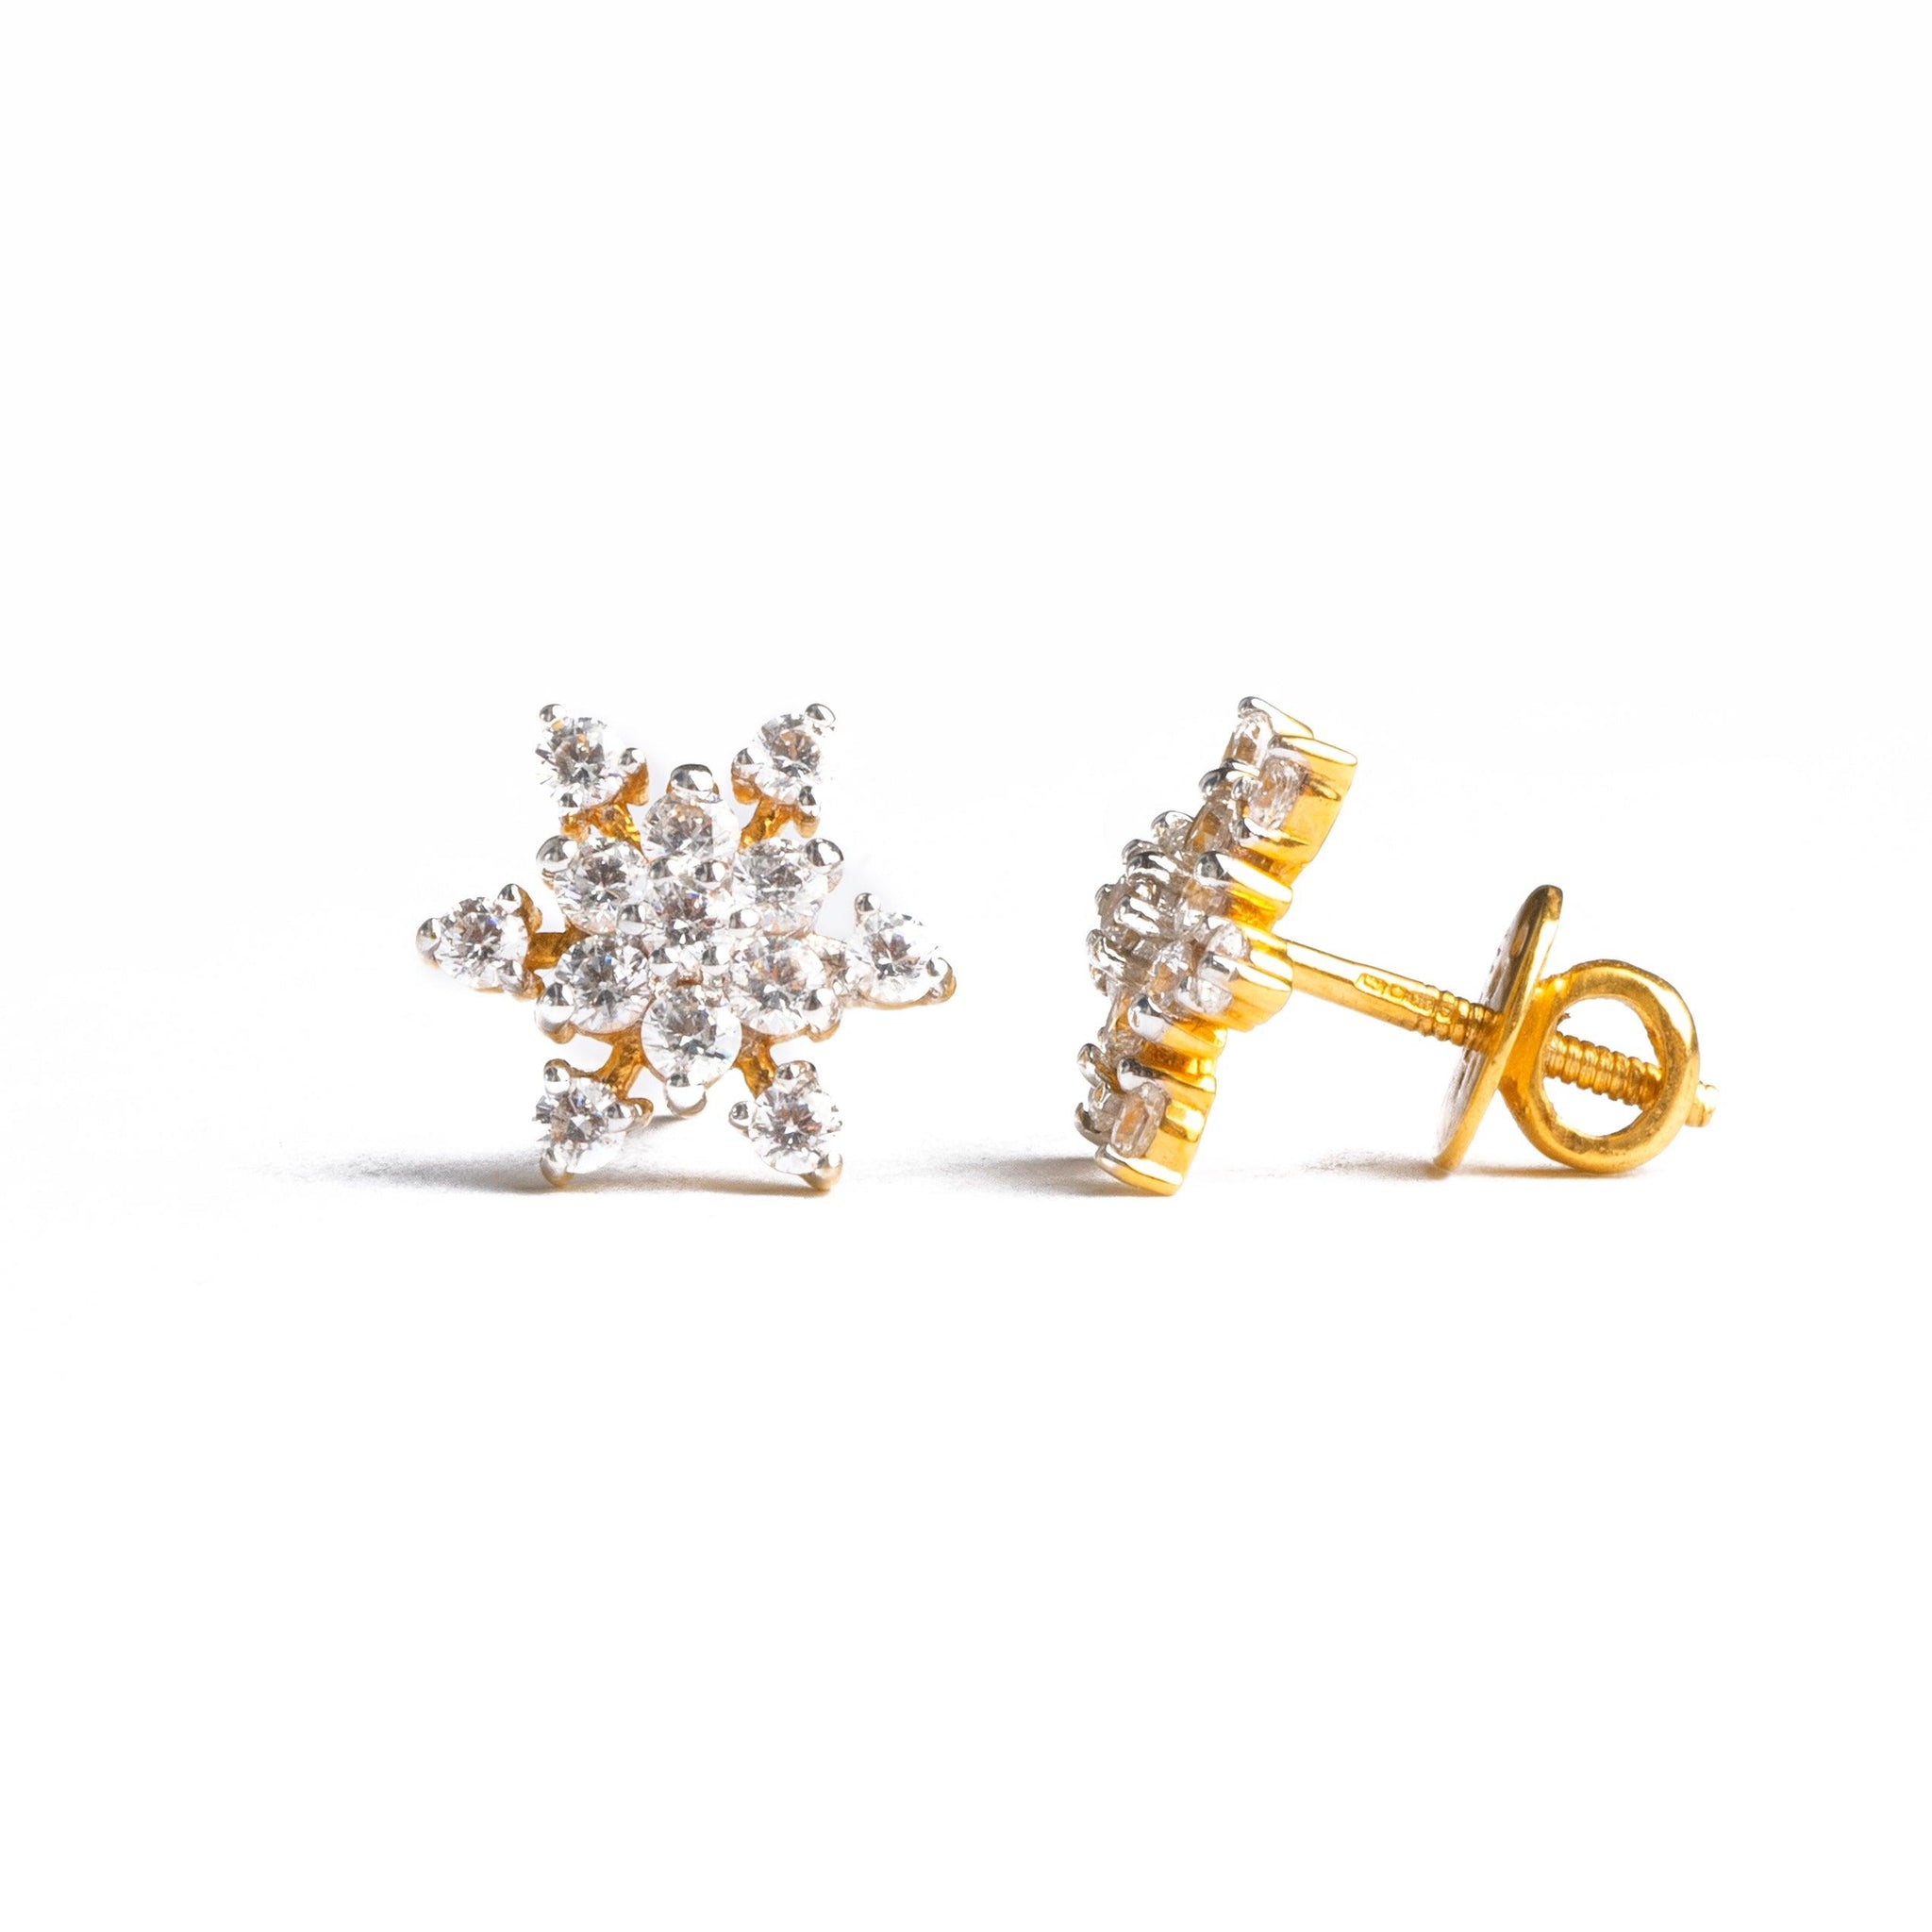 22ct Gold Stud Earrings set with Swarovski Zirconias in a flower design (3.63g) ET10167